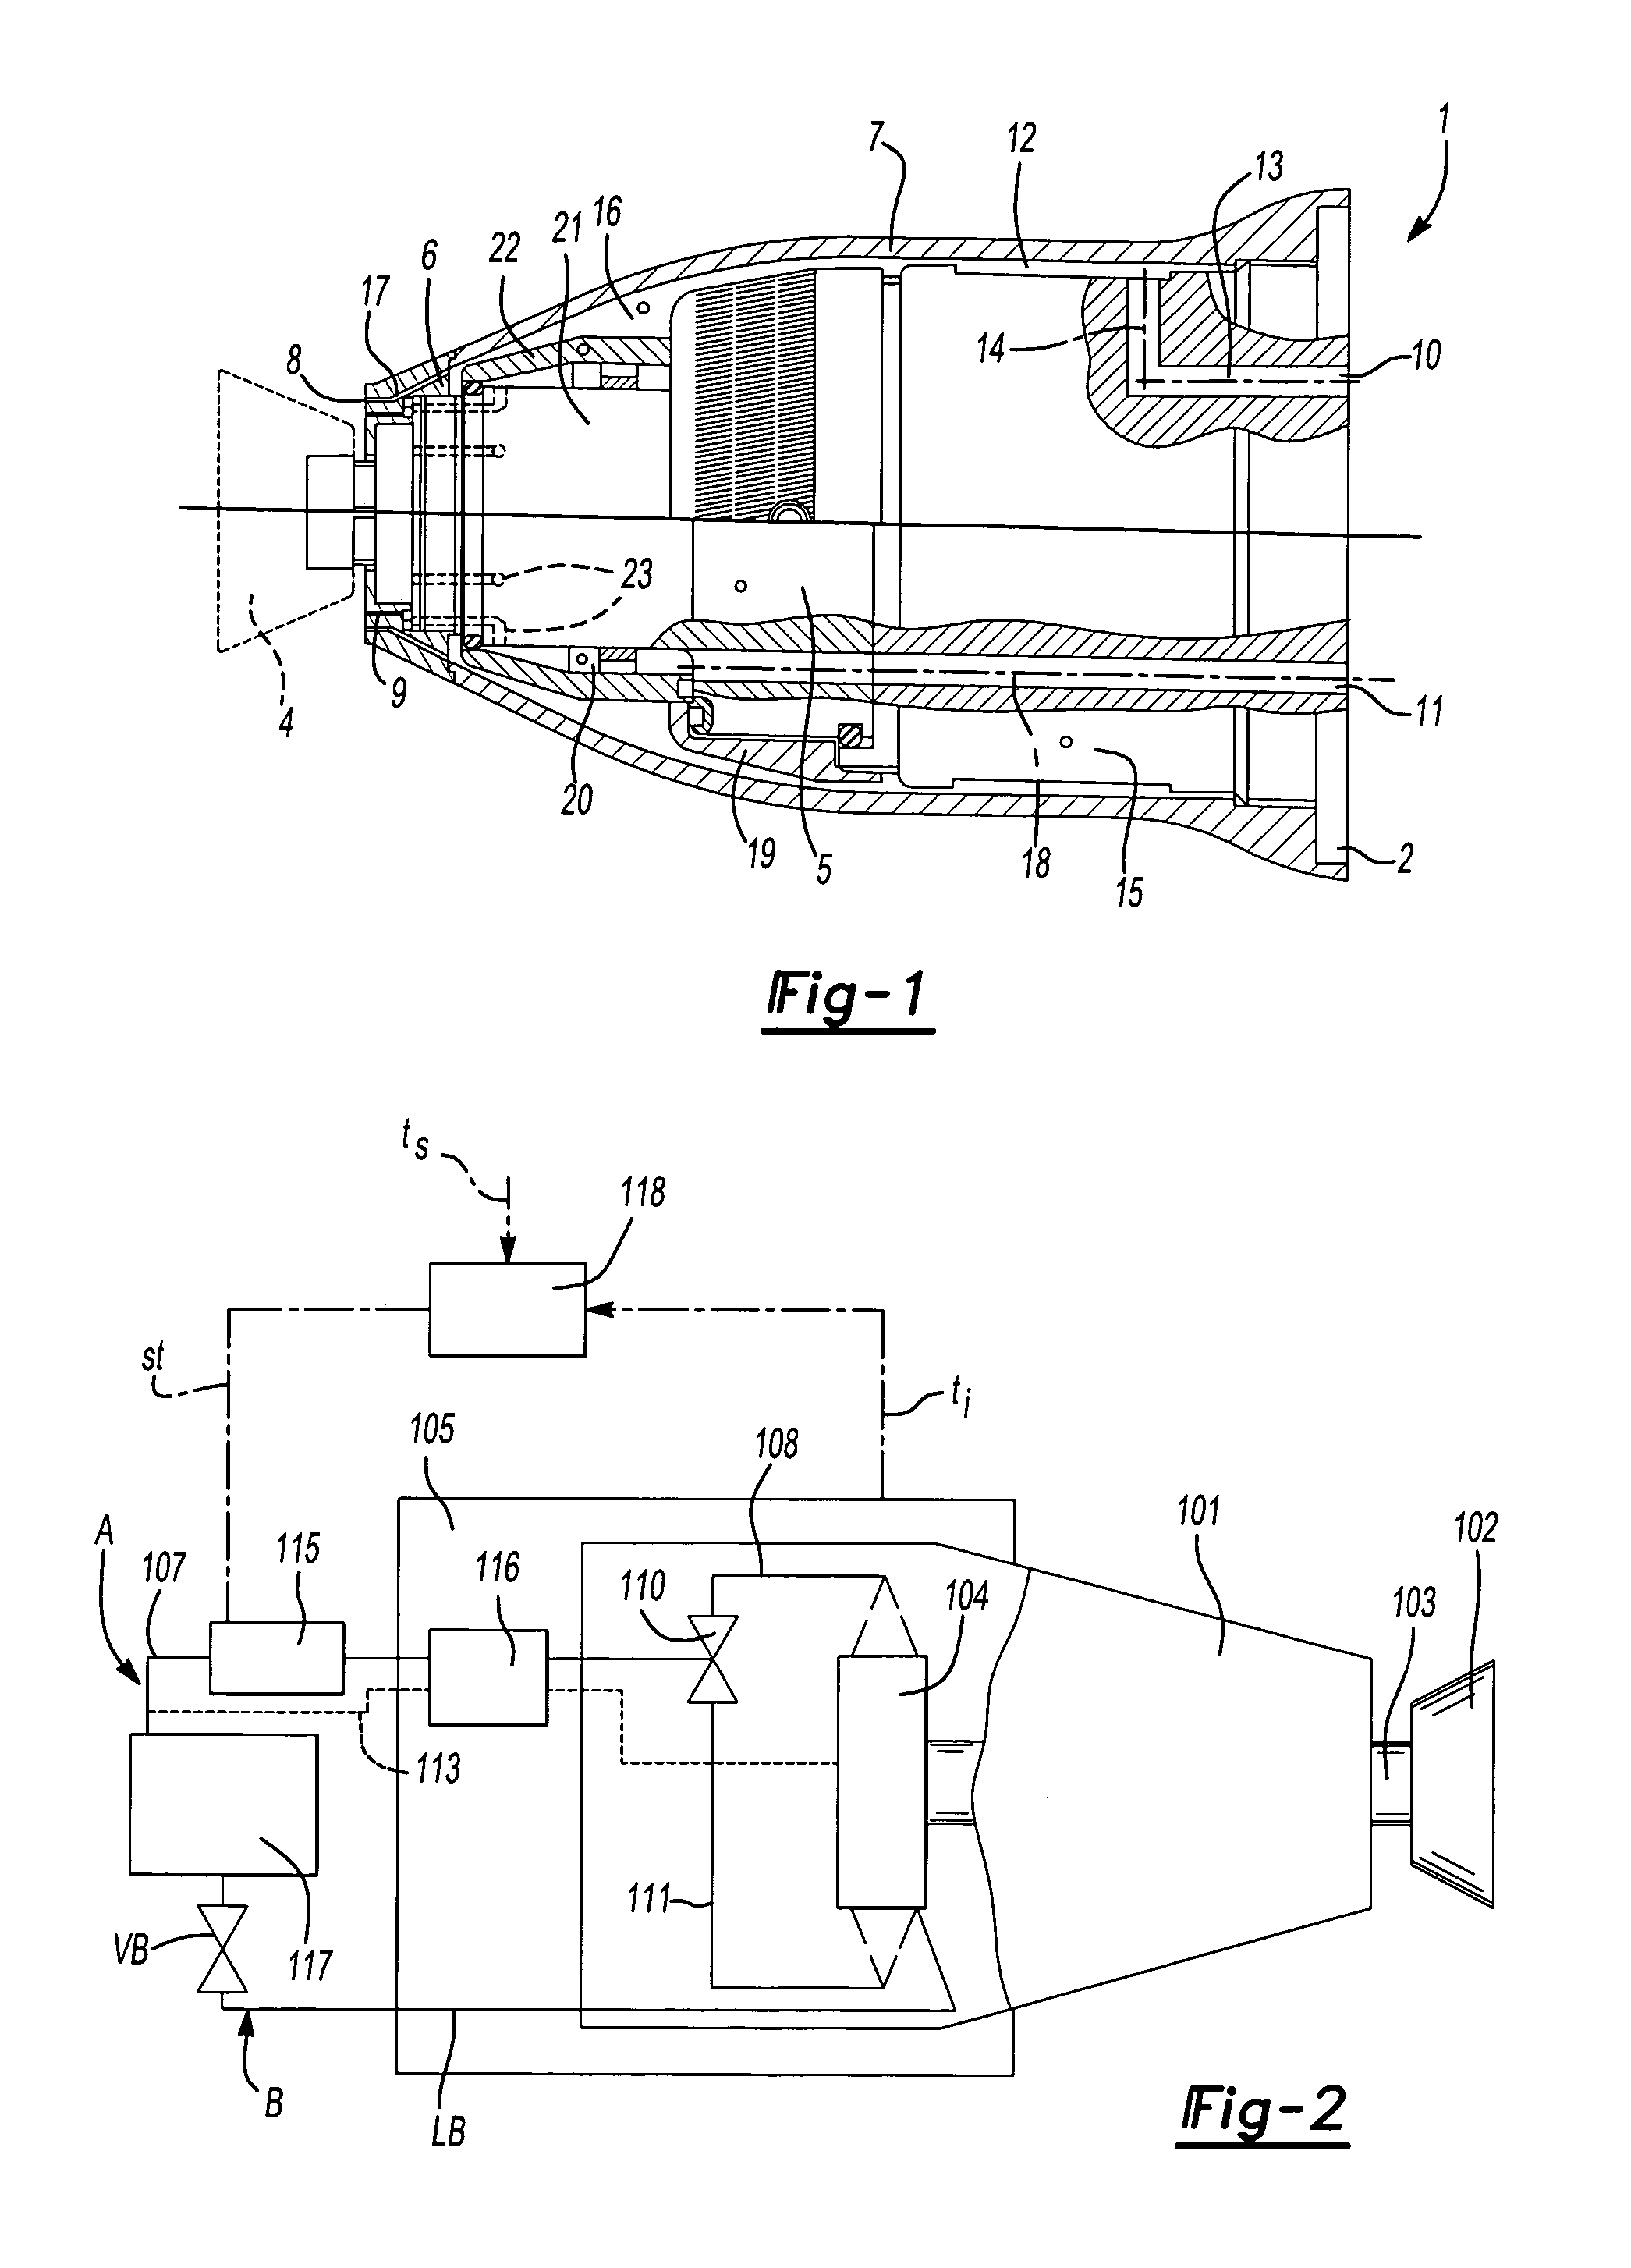 Rotational atomizer with external heating system